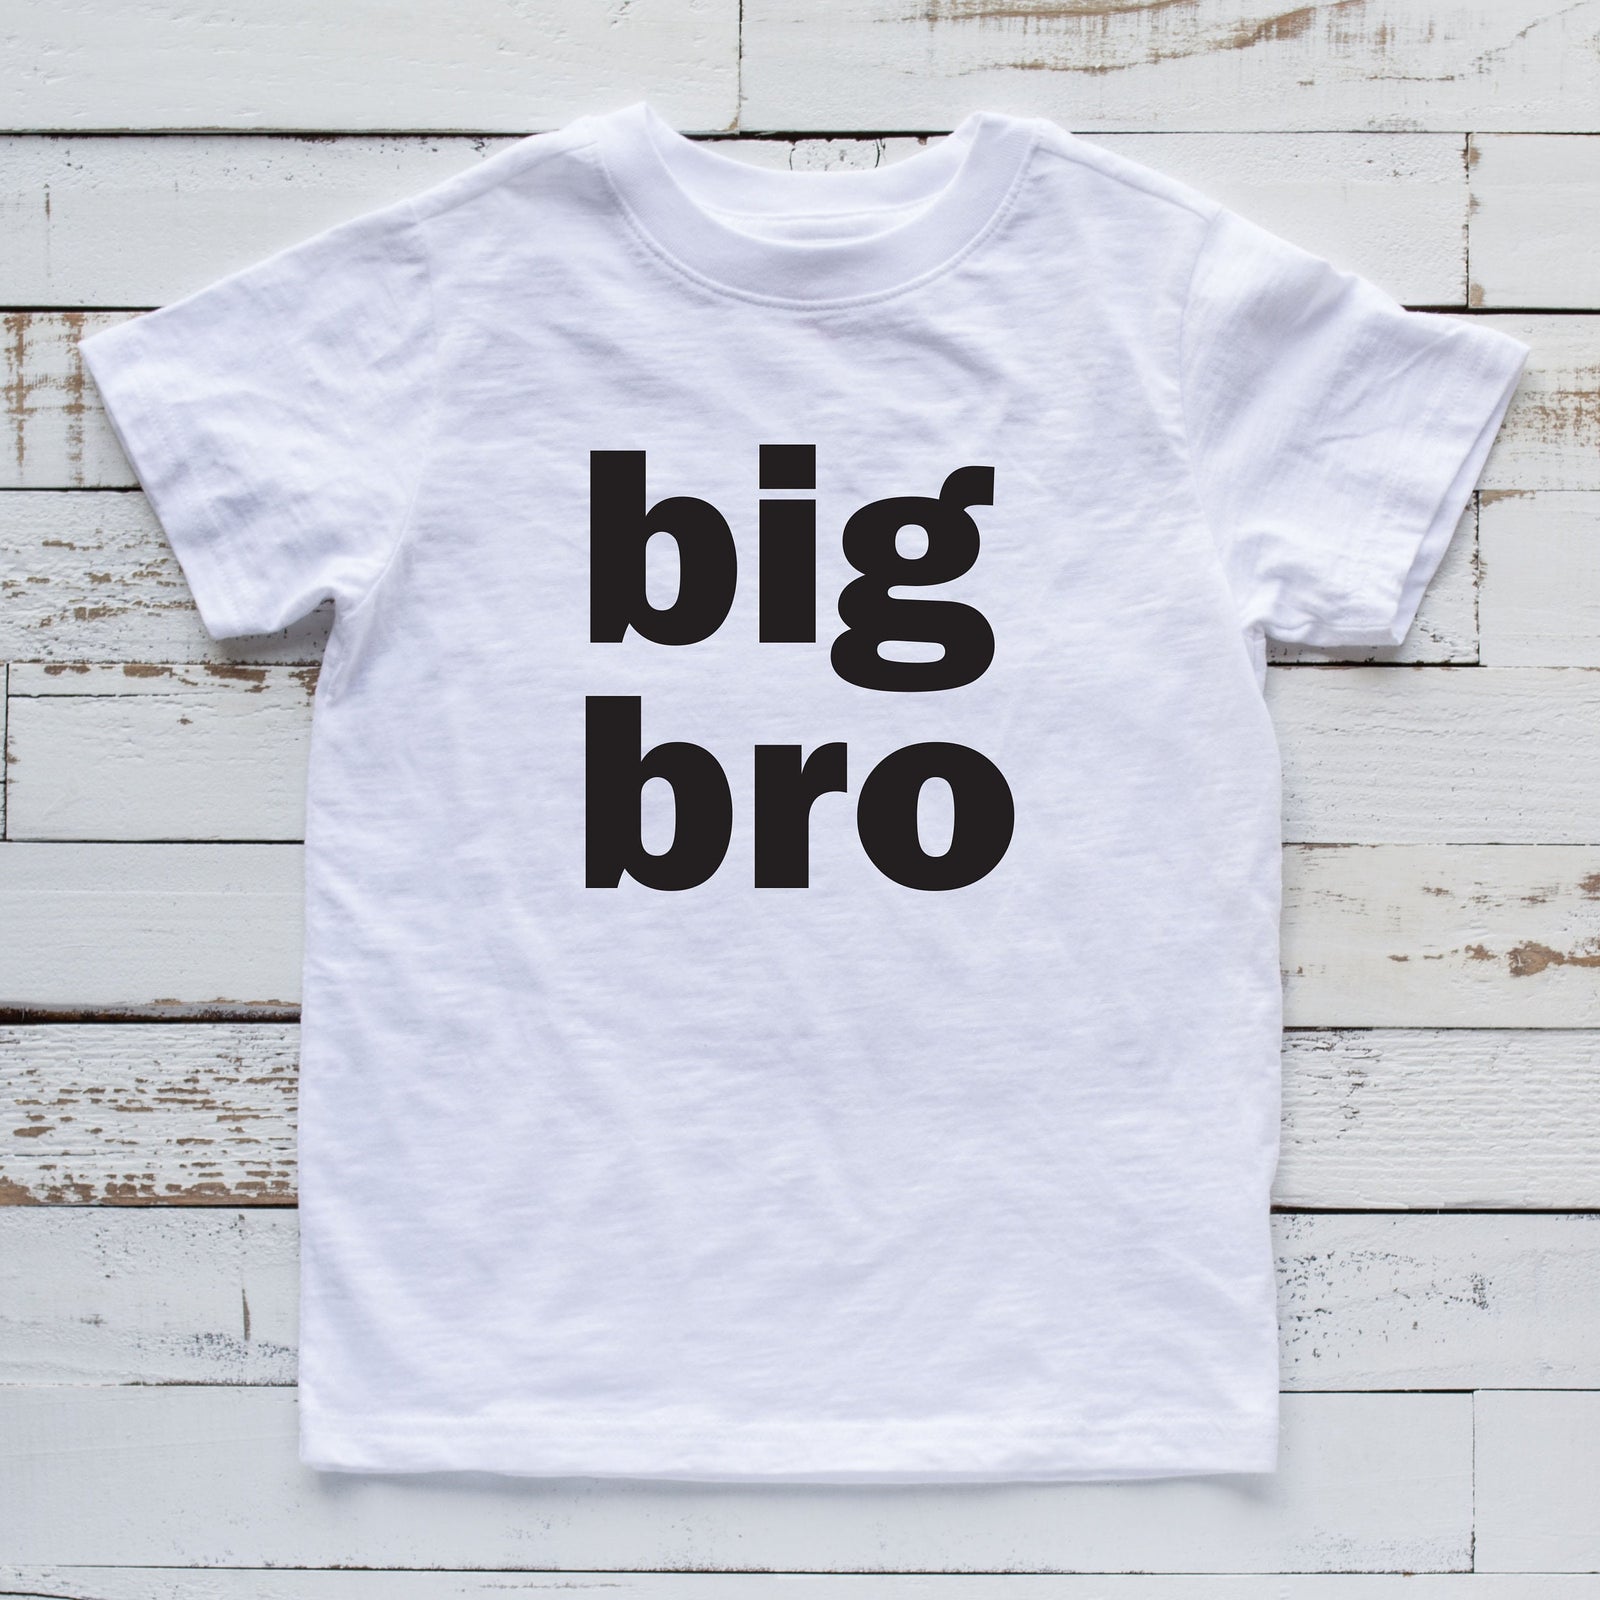 Big BroT Shirt - Big Brother T shrit - Baby Announcement Shirt - Family Announcement